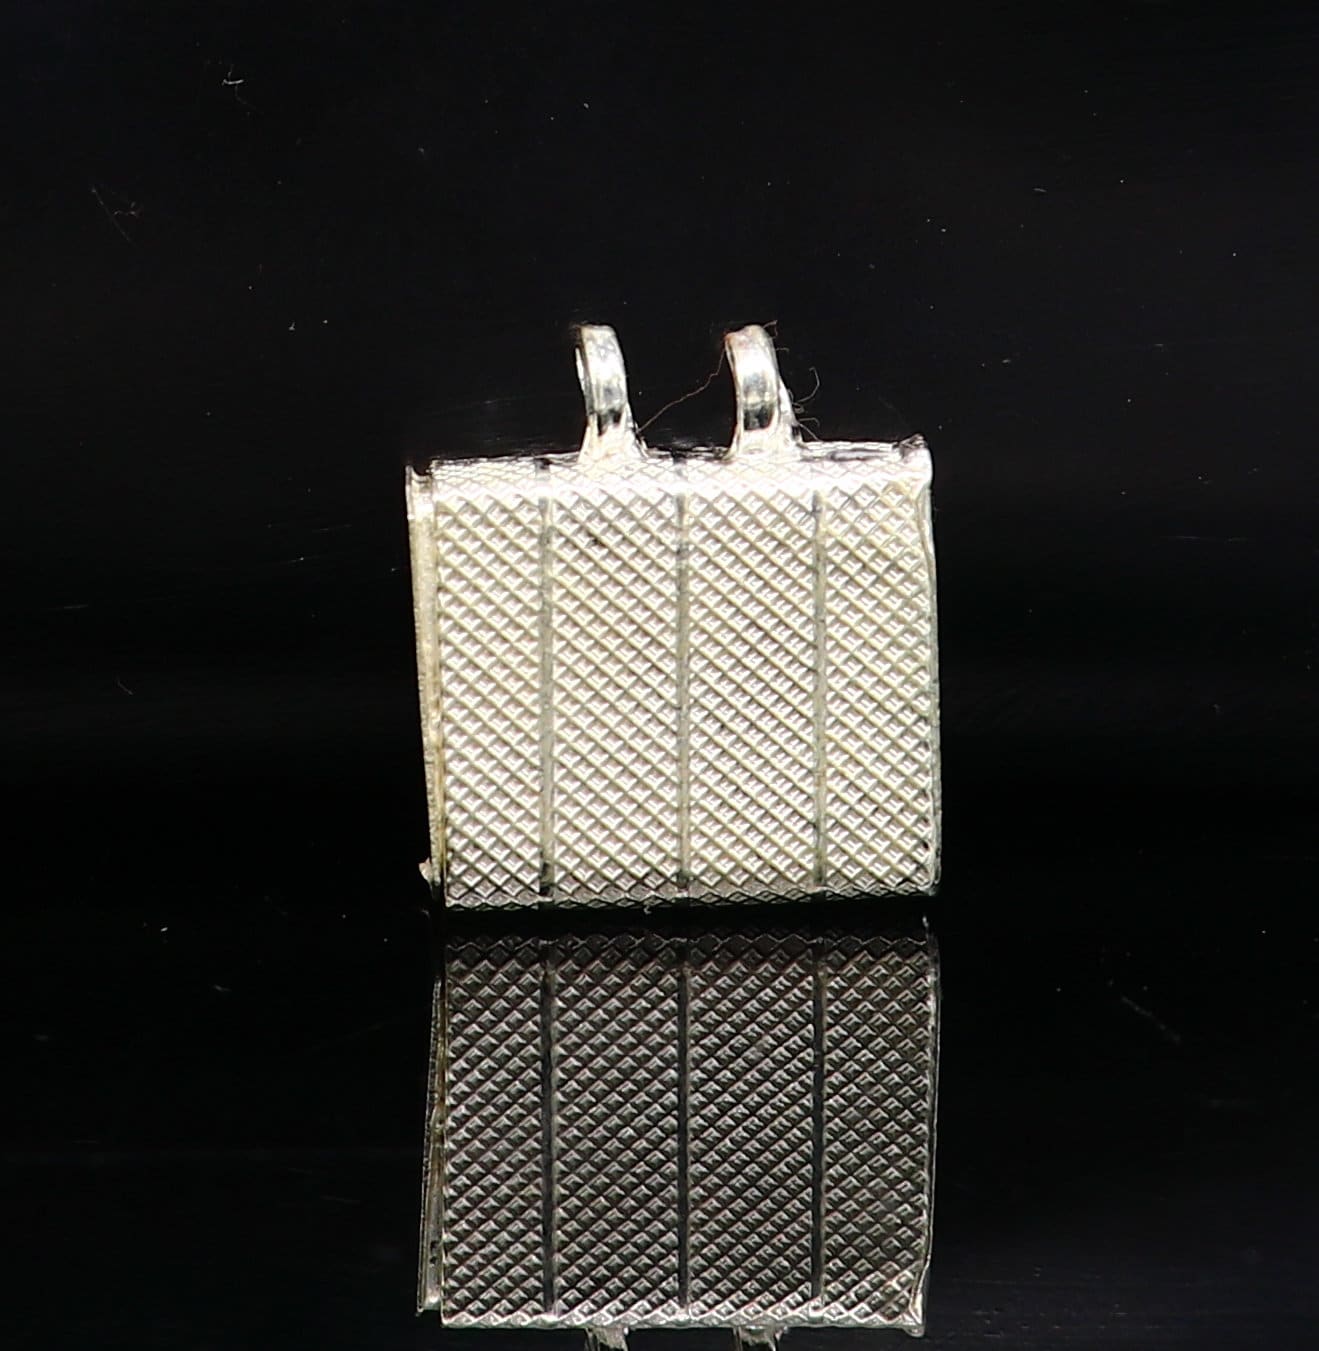 925 sterling silver handmade gorgeous Square shape handmade amulet box amulet pendant, mantra box, silver tabiz /mascot kavacham ssp664 - TRIBAL ORNAMENTS